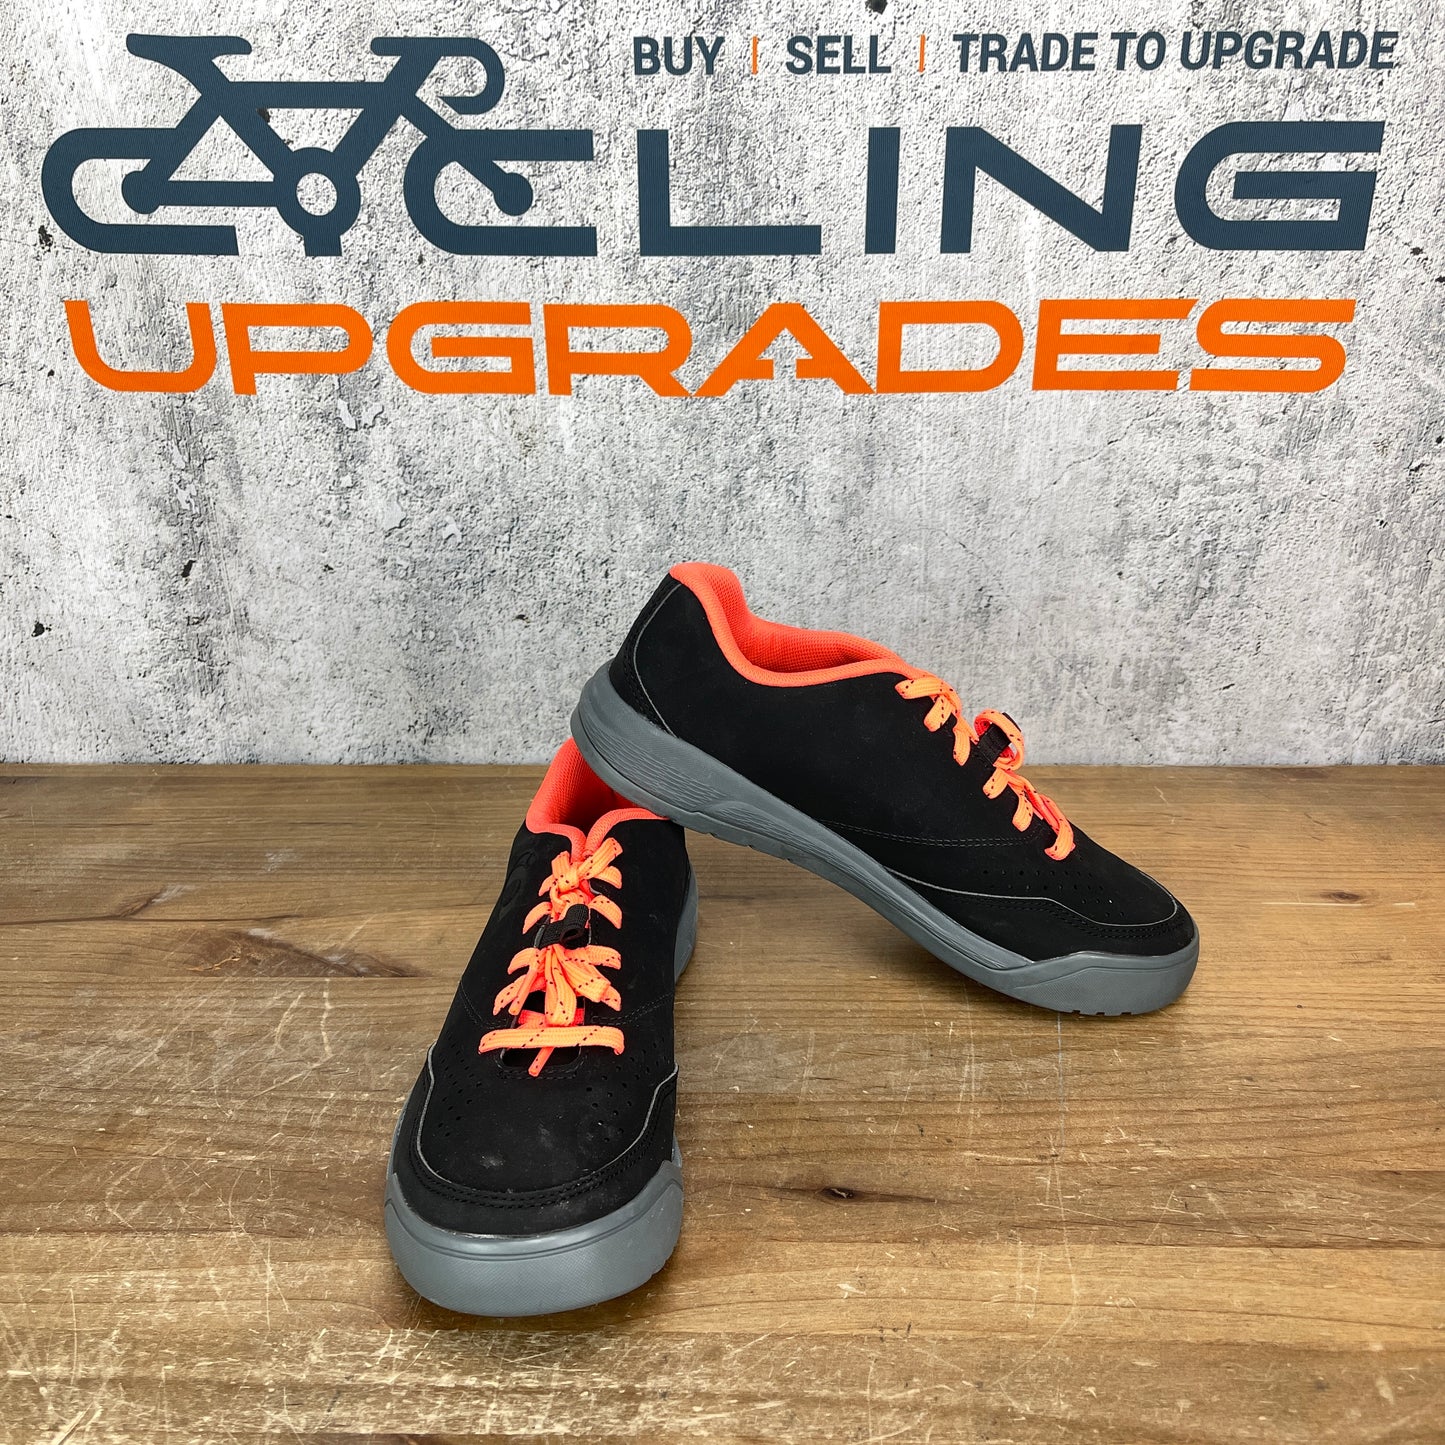 Pearl iZumi X-ALP Flow Women's 40 (EU) 8 (US) MTB Cycling Shoes for Flat Pedals